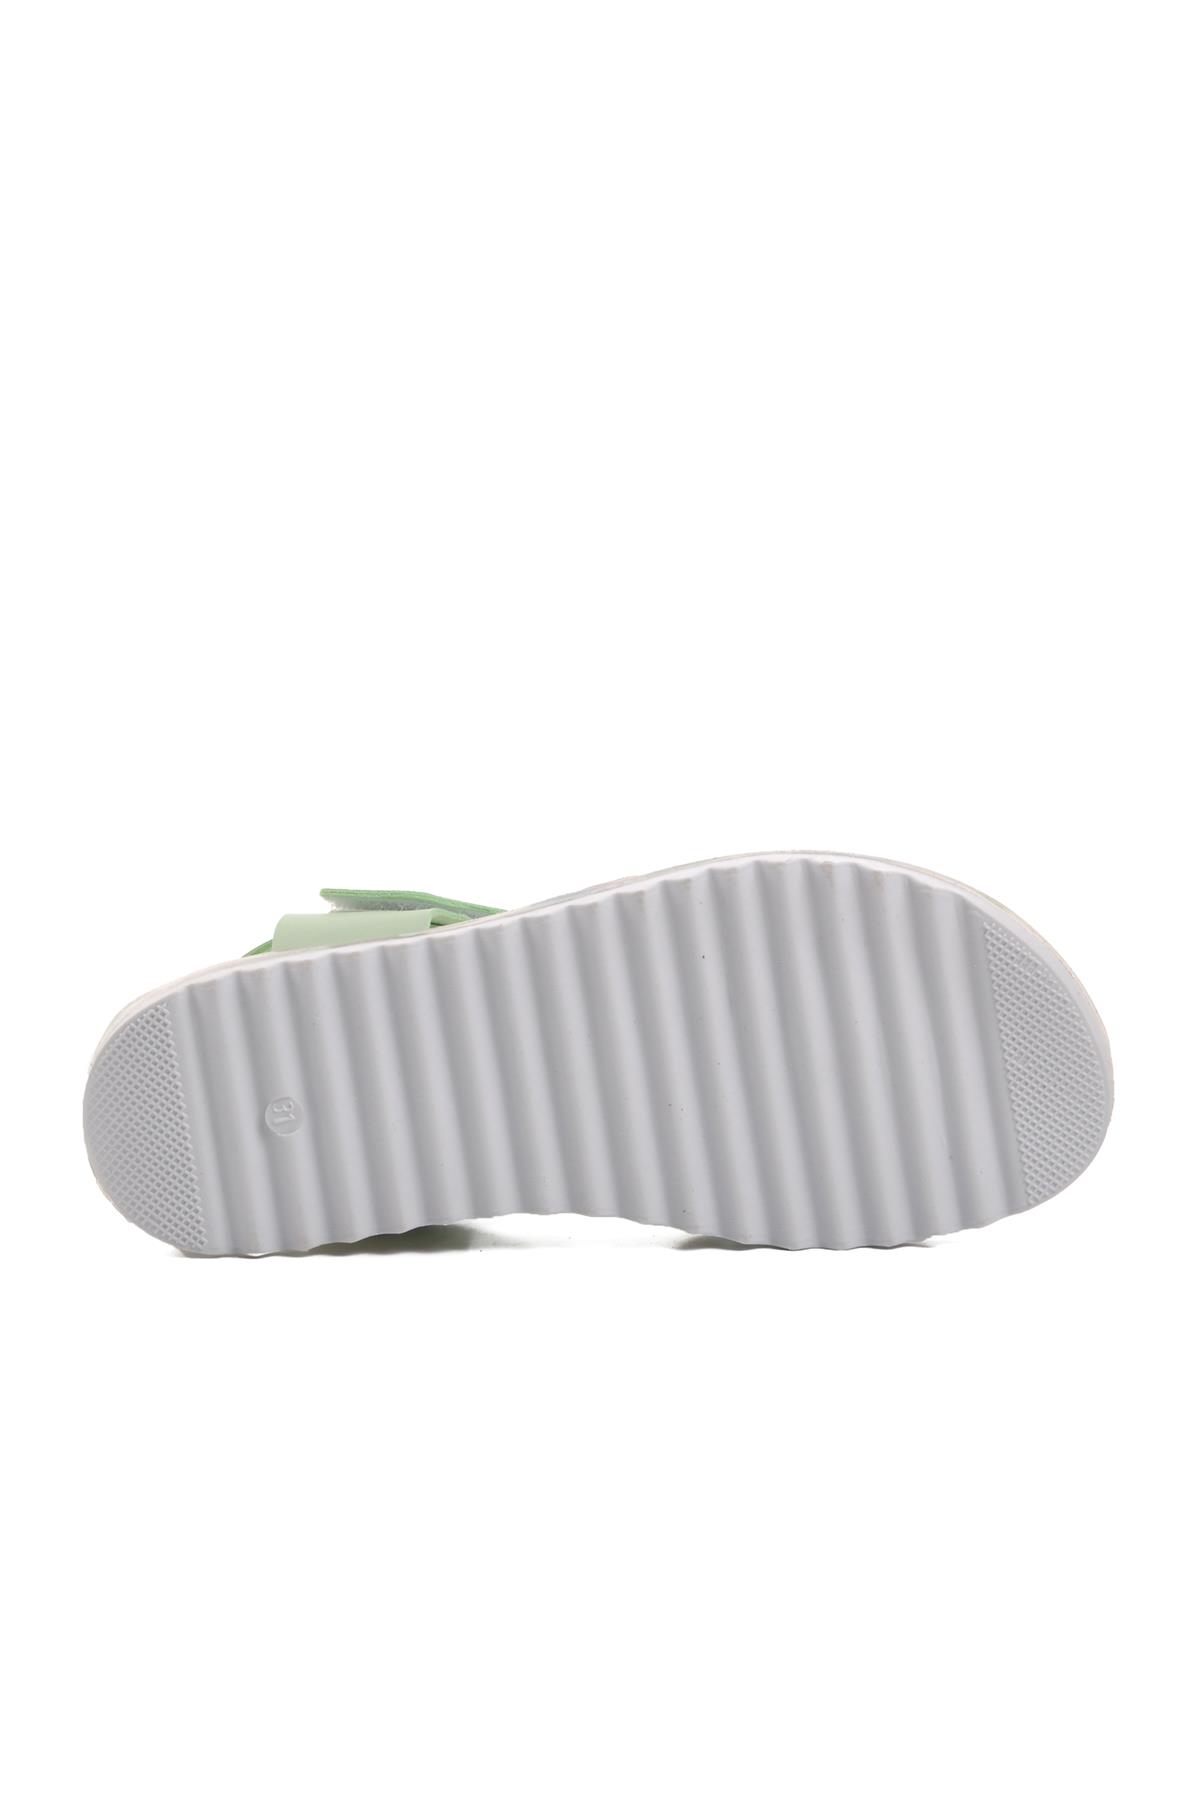 Ayakmod Arz 1200-F Mint Yeşili Cırtlı Kız Çocuk Sandalet Ayakmod Çocuk Sandalet